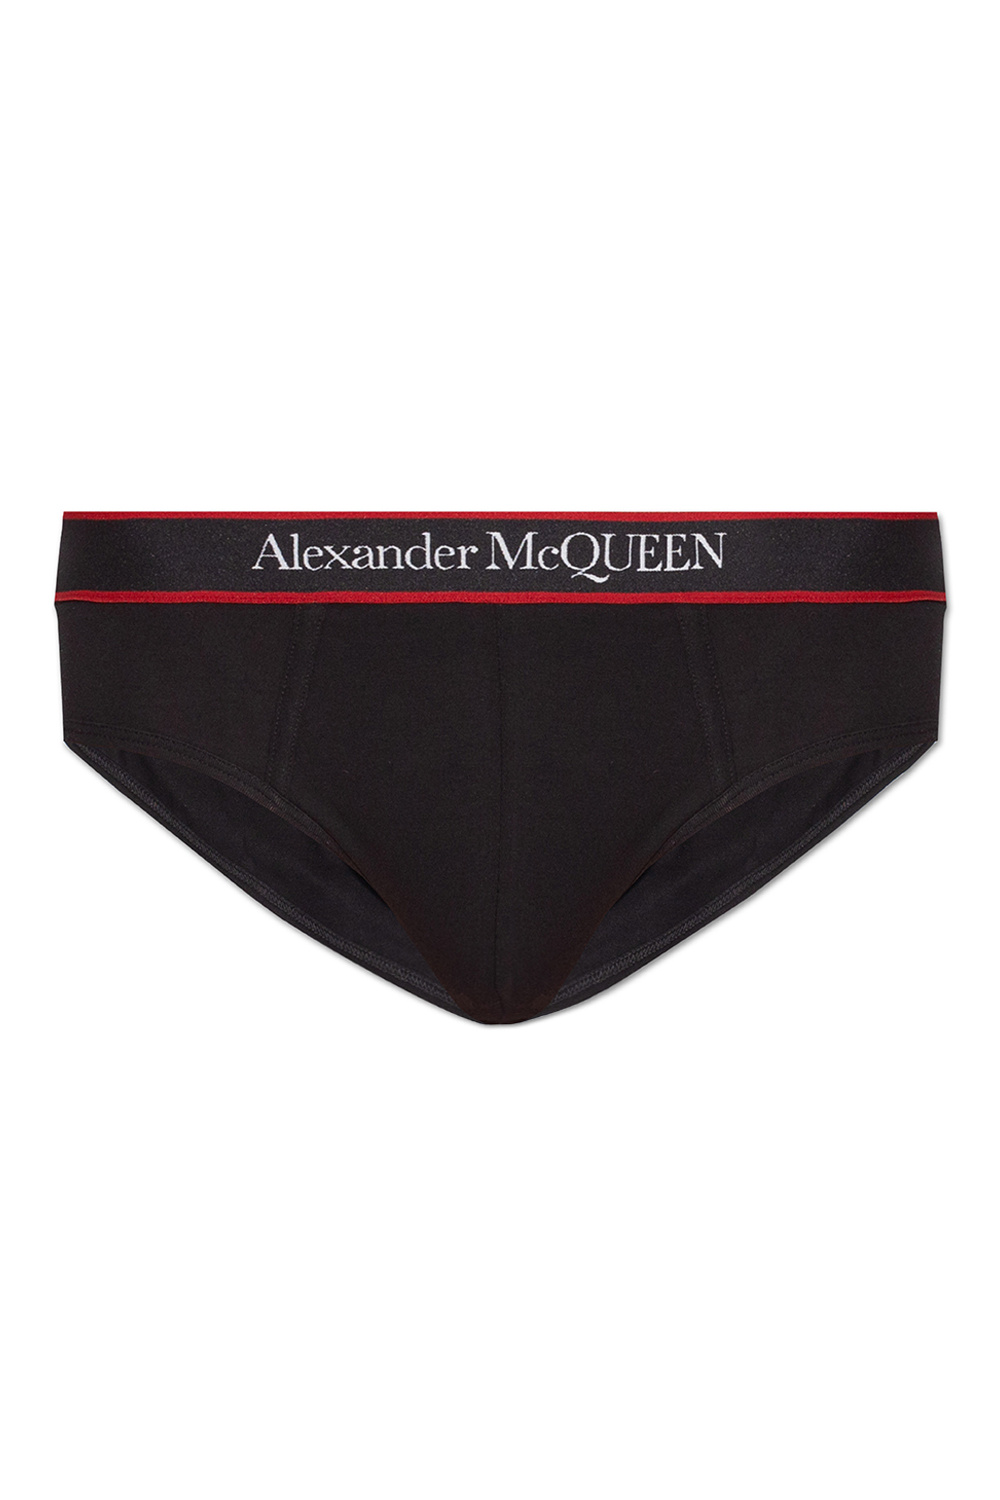 Alexander McQueen patterned sweater alexander mcqueen pullover